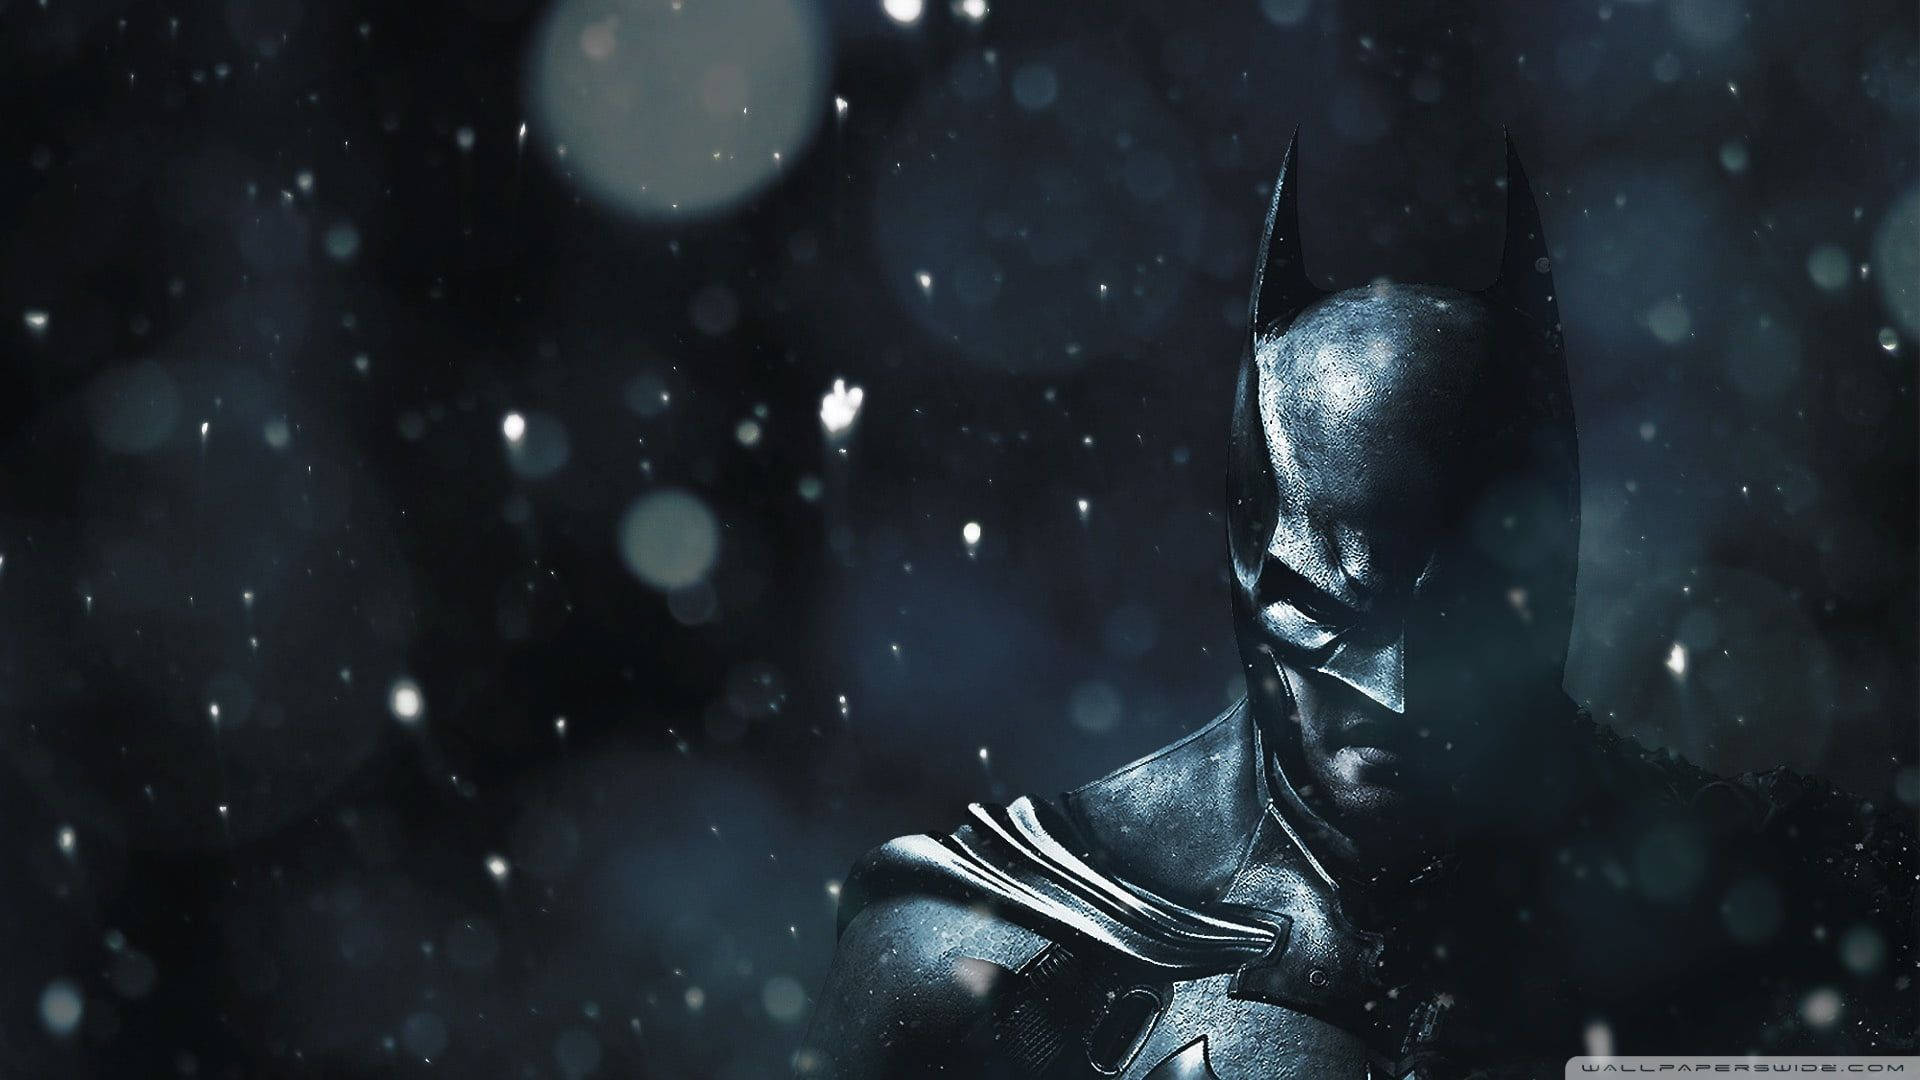 The Dark Knight, Batman Rises Background